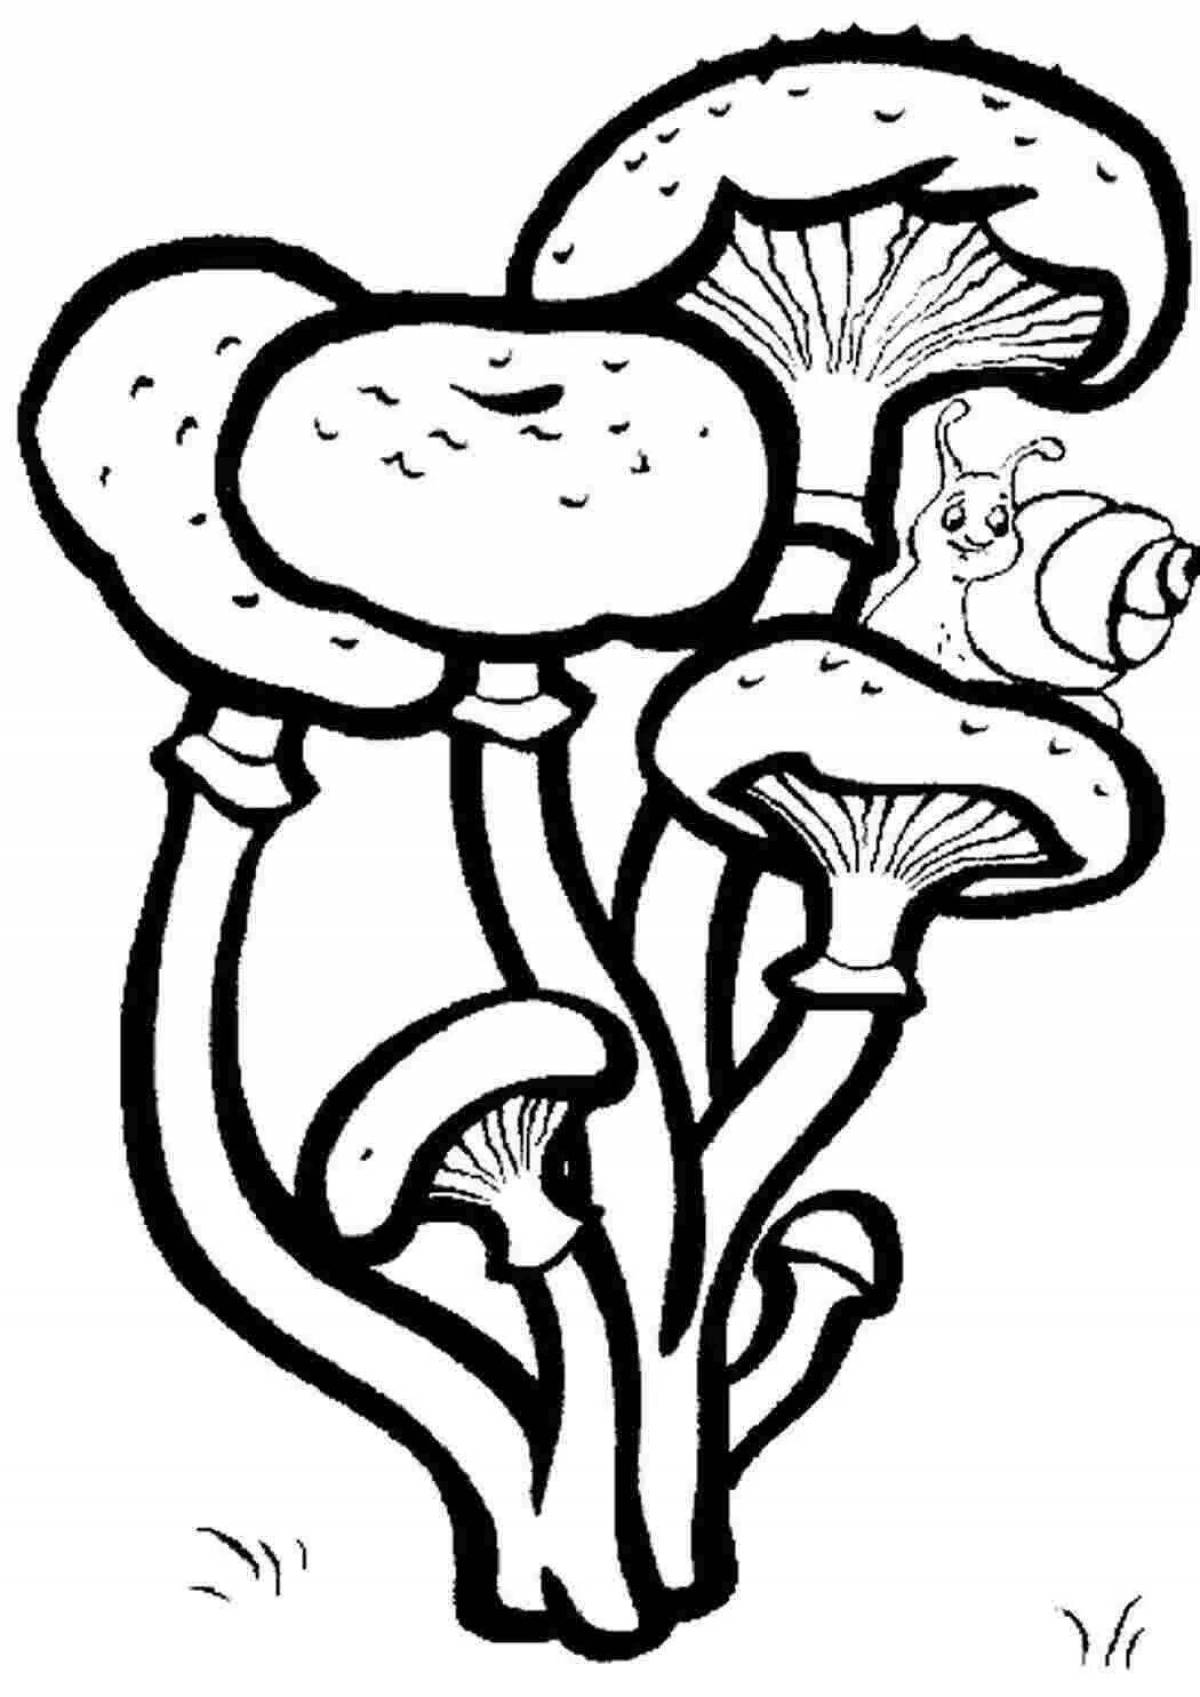 Drawing of glowing mushroom